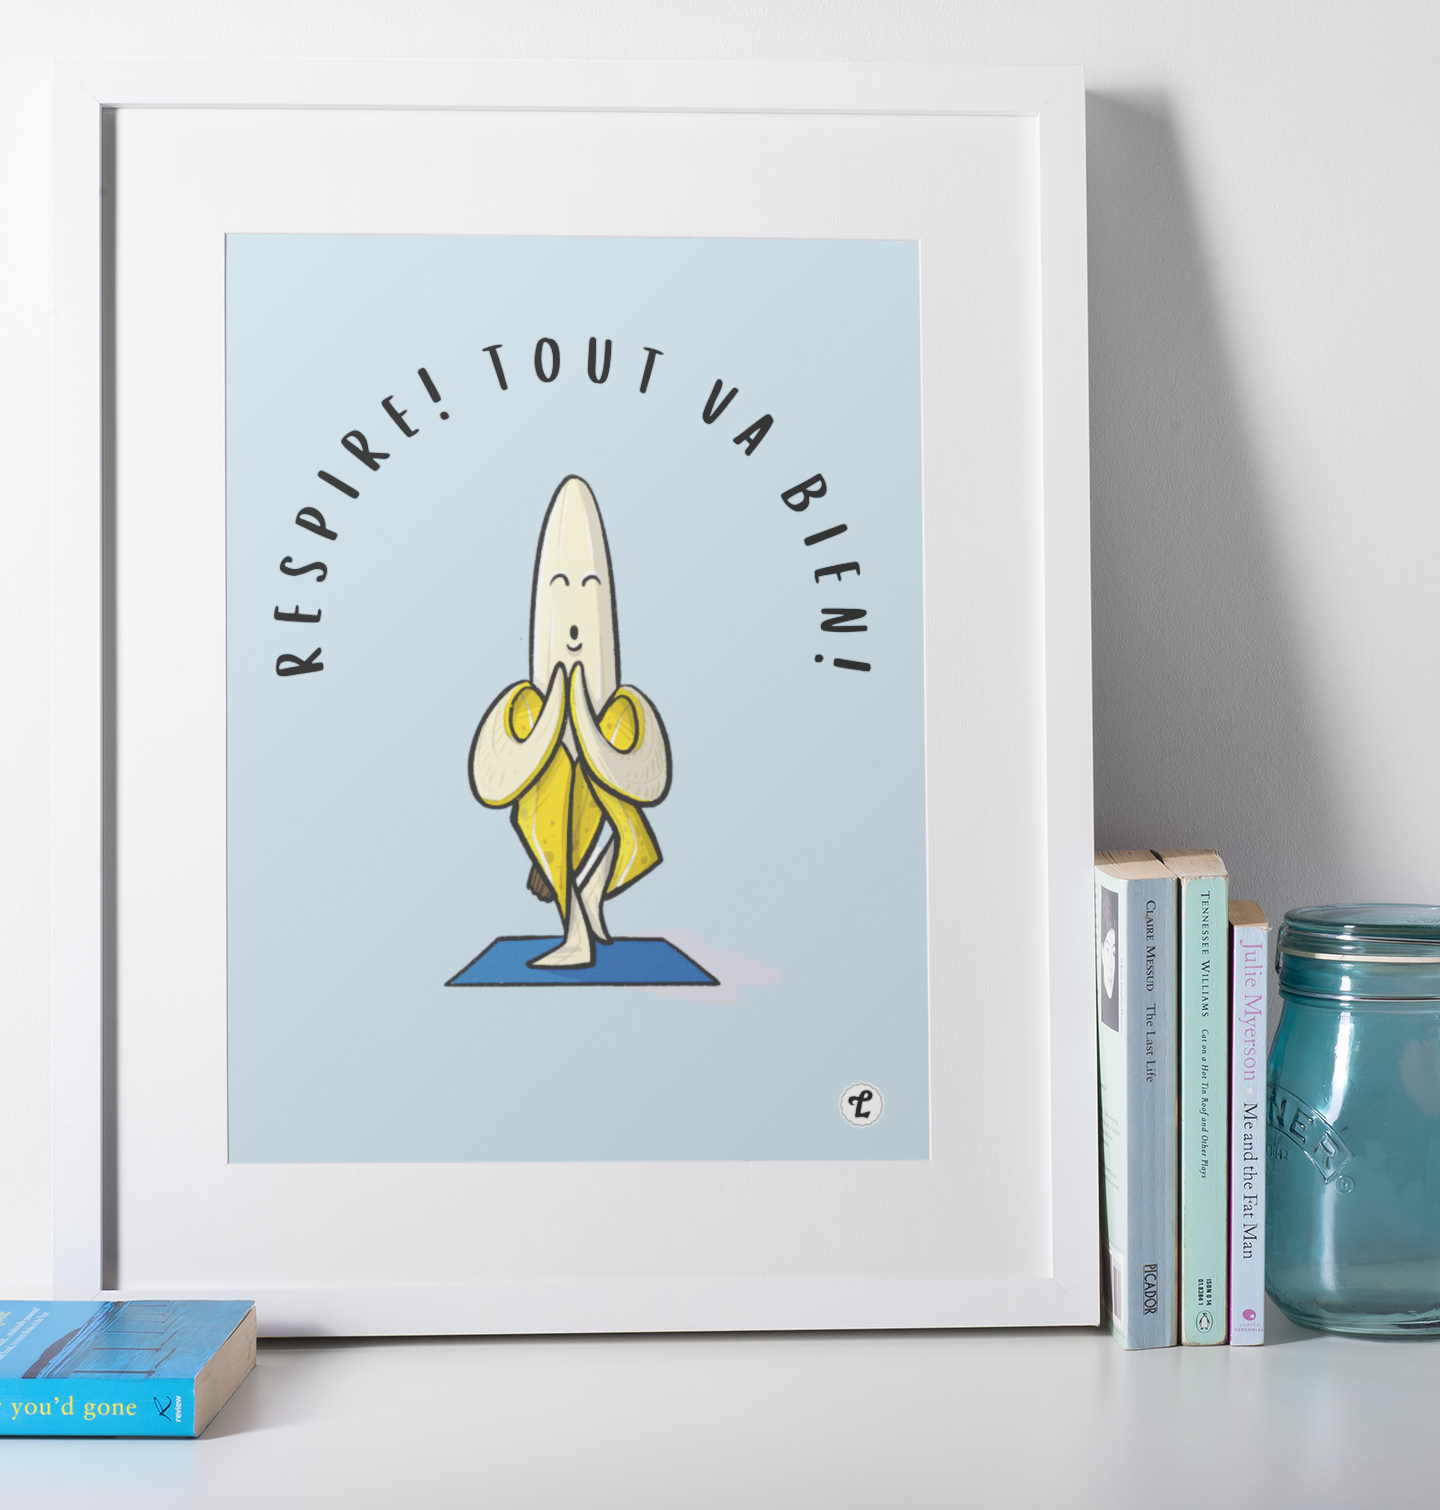 Namaste banane!